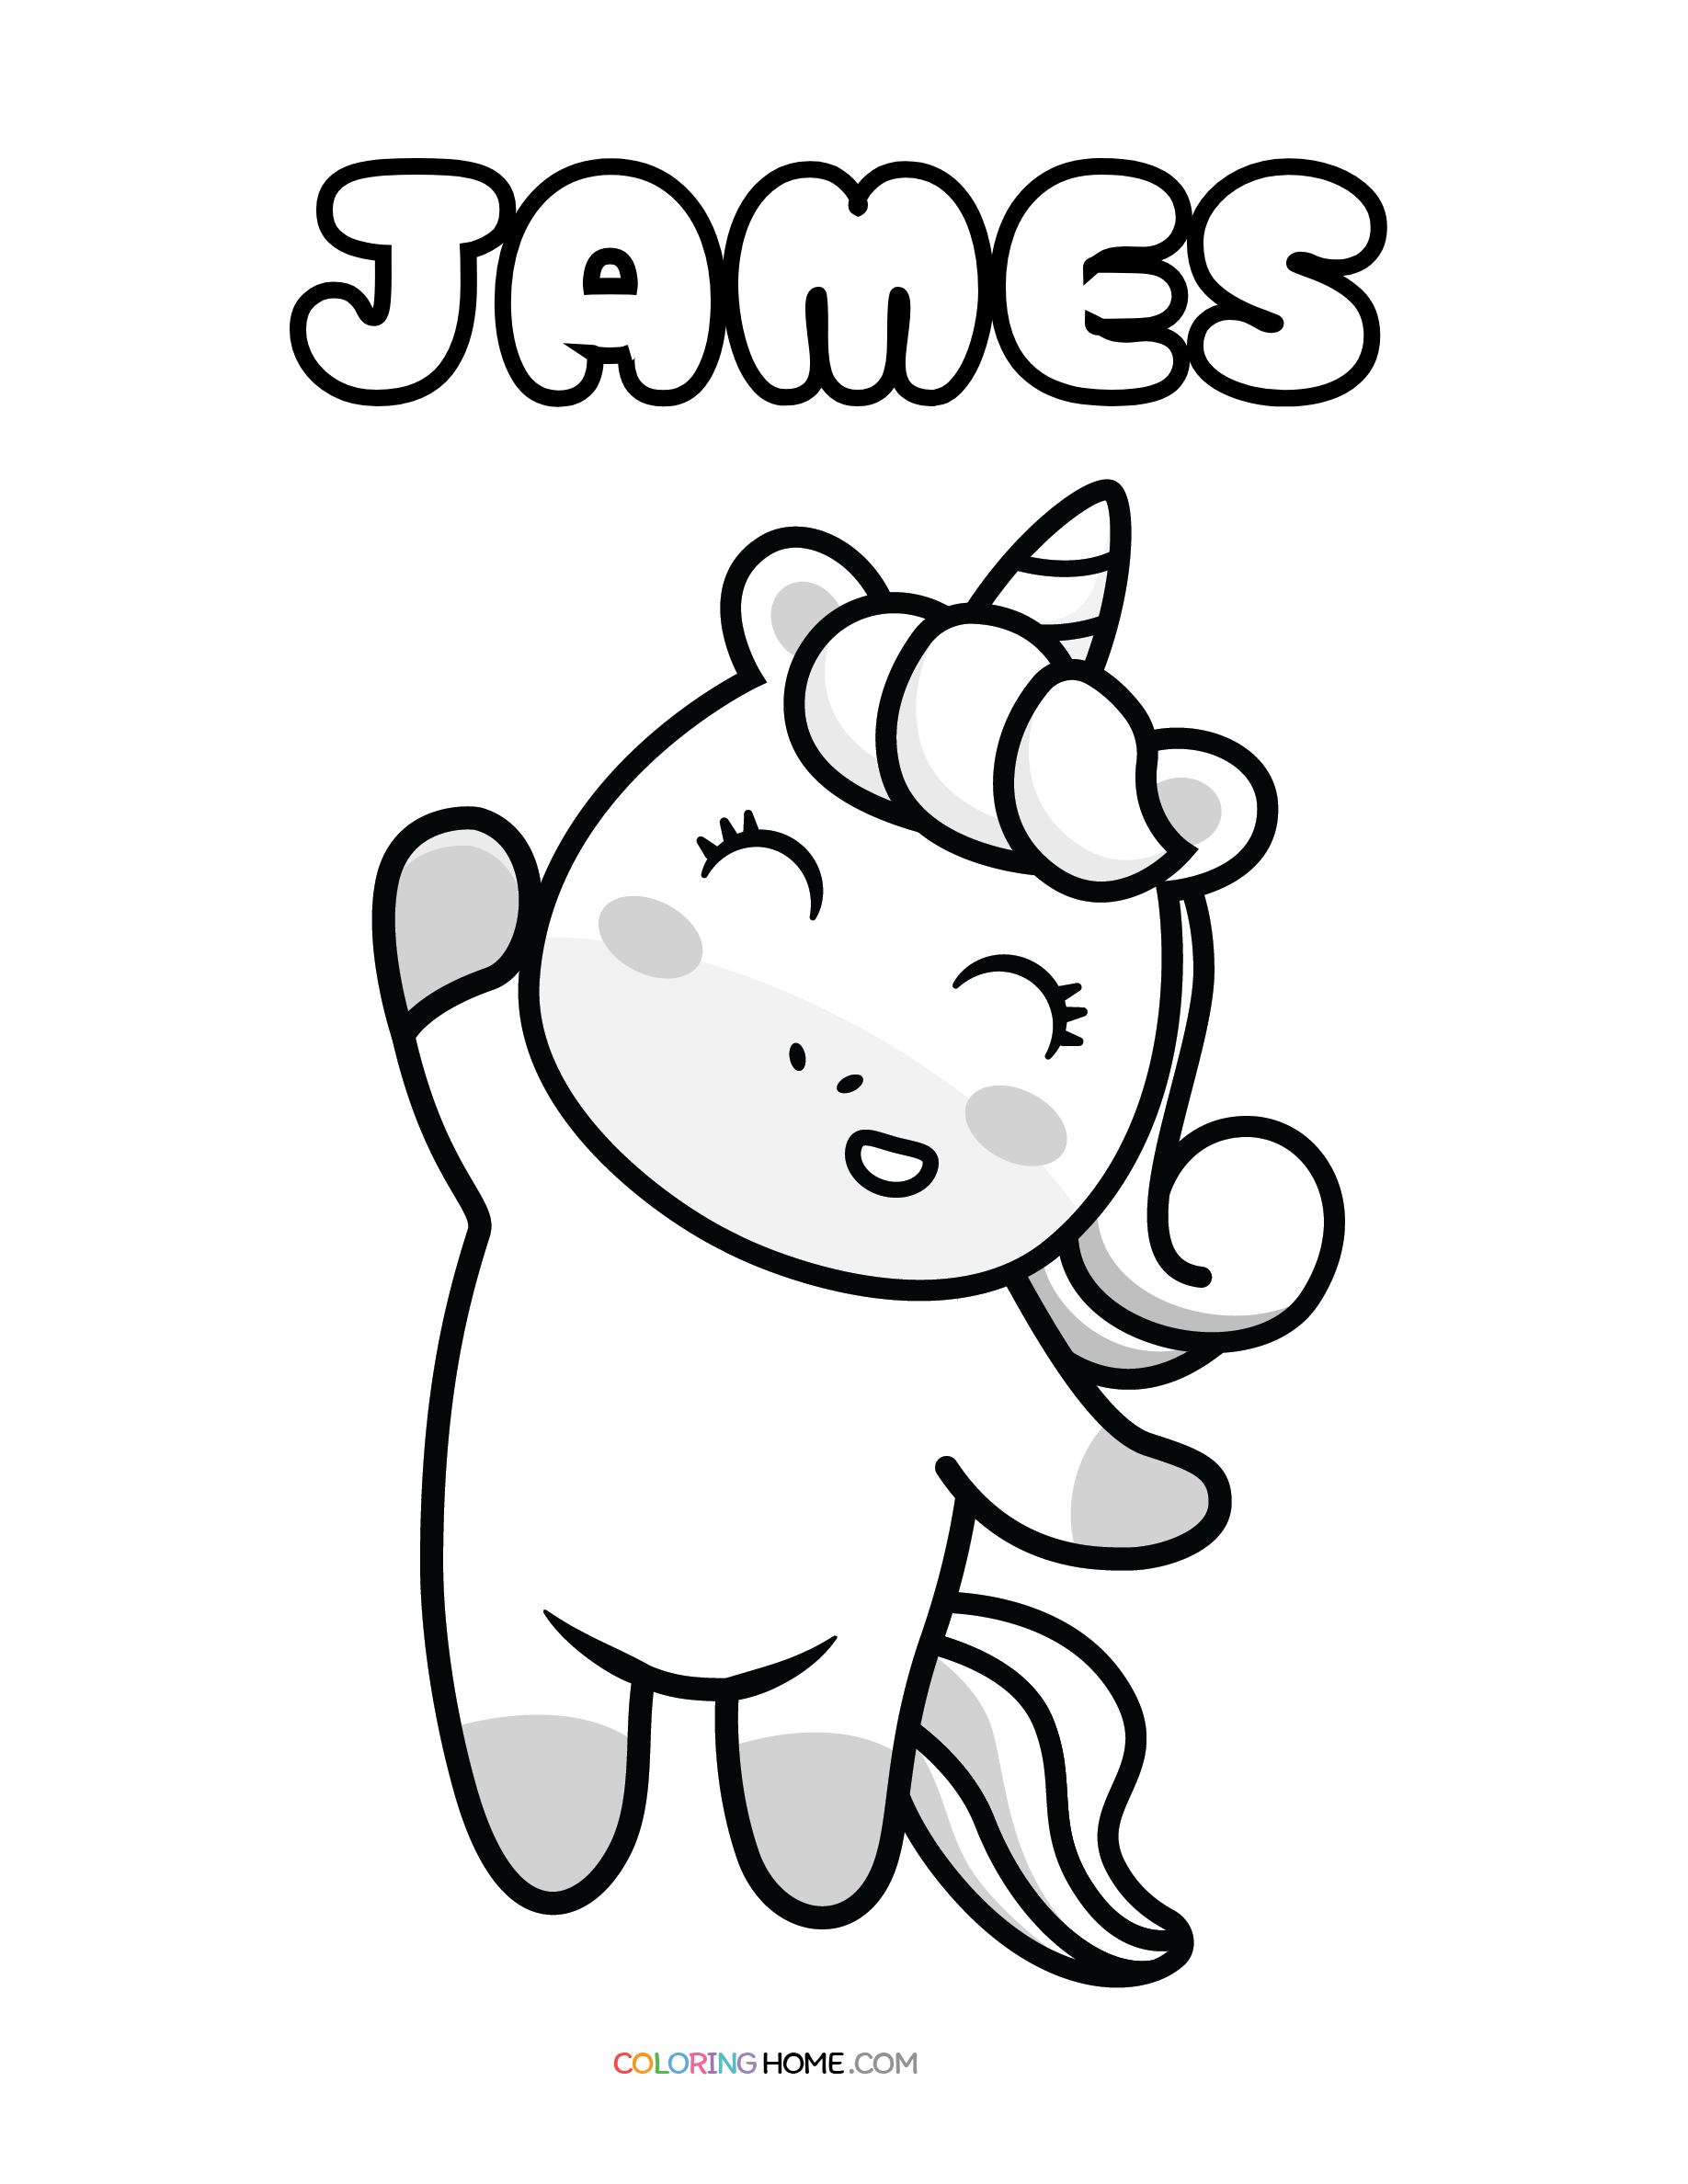 James unicorn coloring page